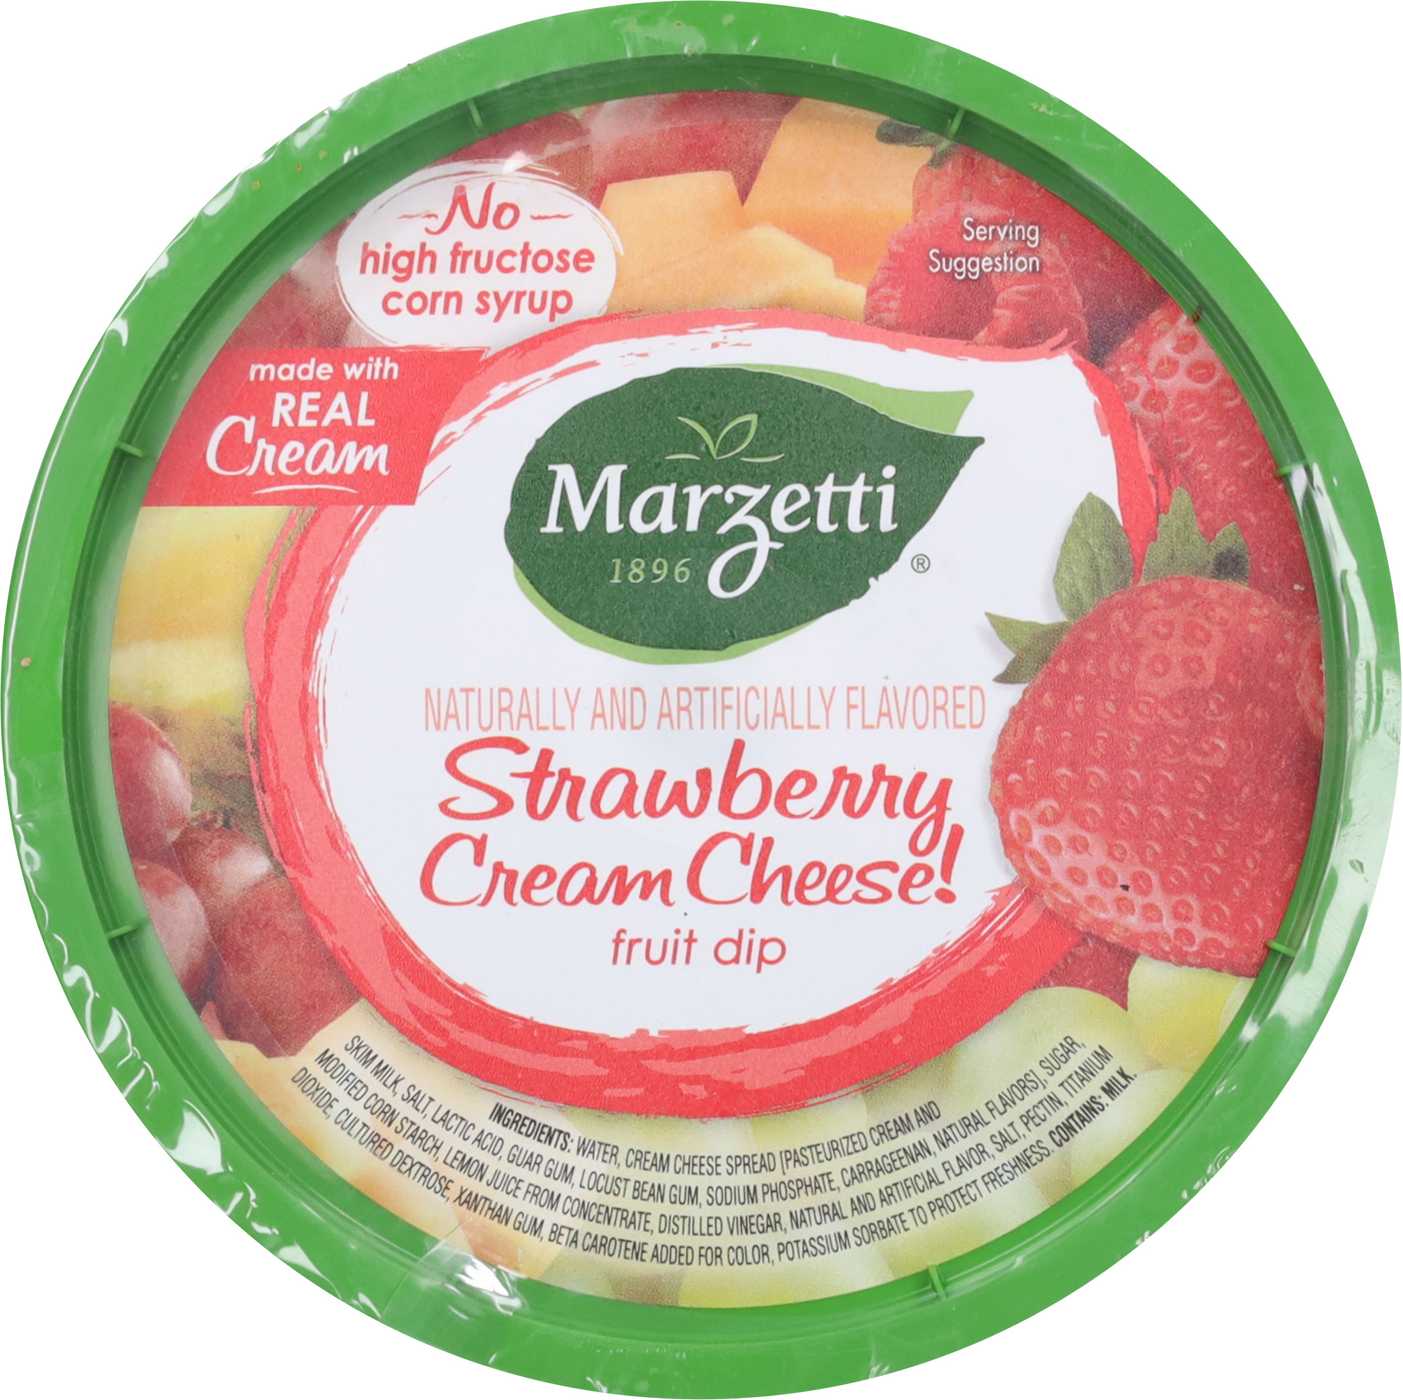 Marzetti Strawberry Cream Cheese Fruit Dip; image 4 of 4